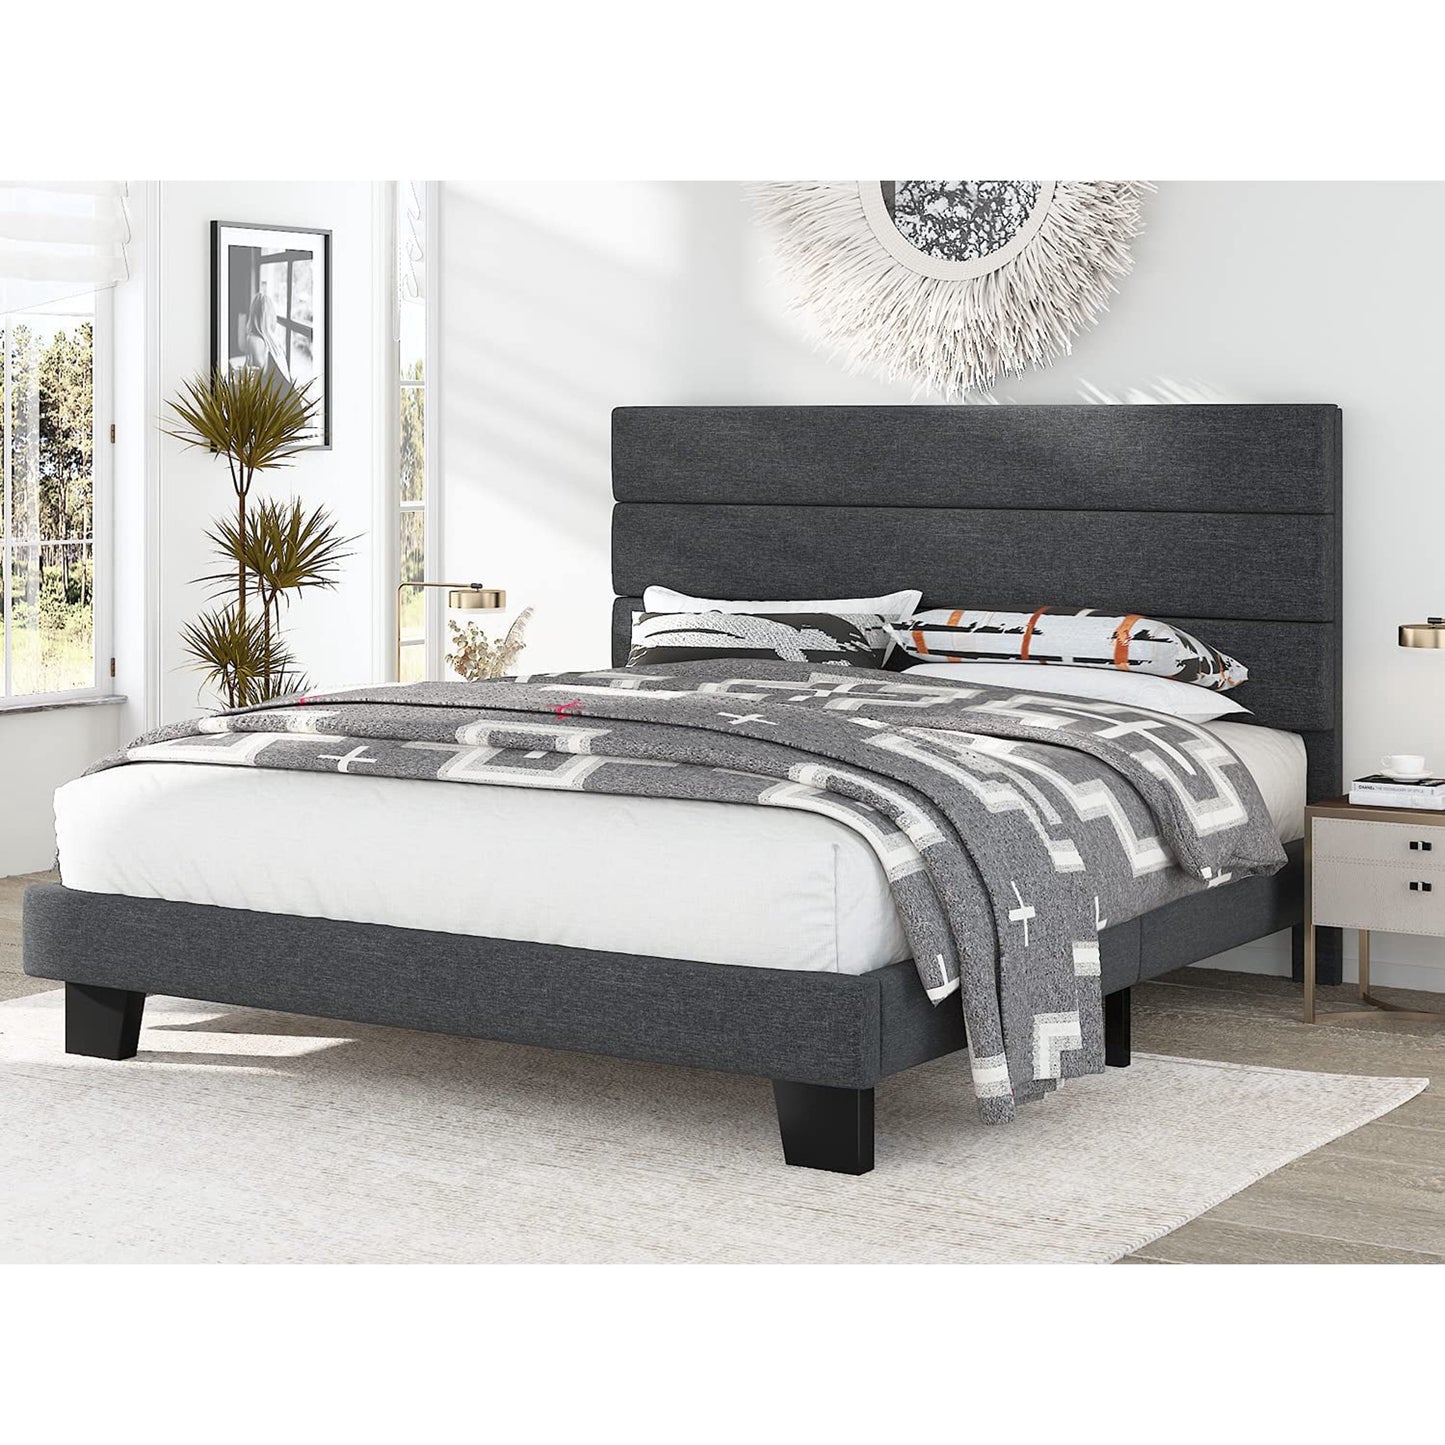 Allewie Full size Upholstered Platform Bed Frame with Headboard, Dark Grey